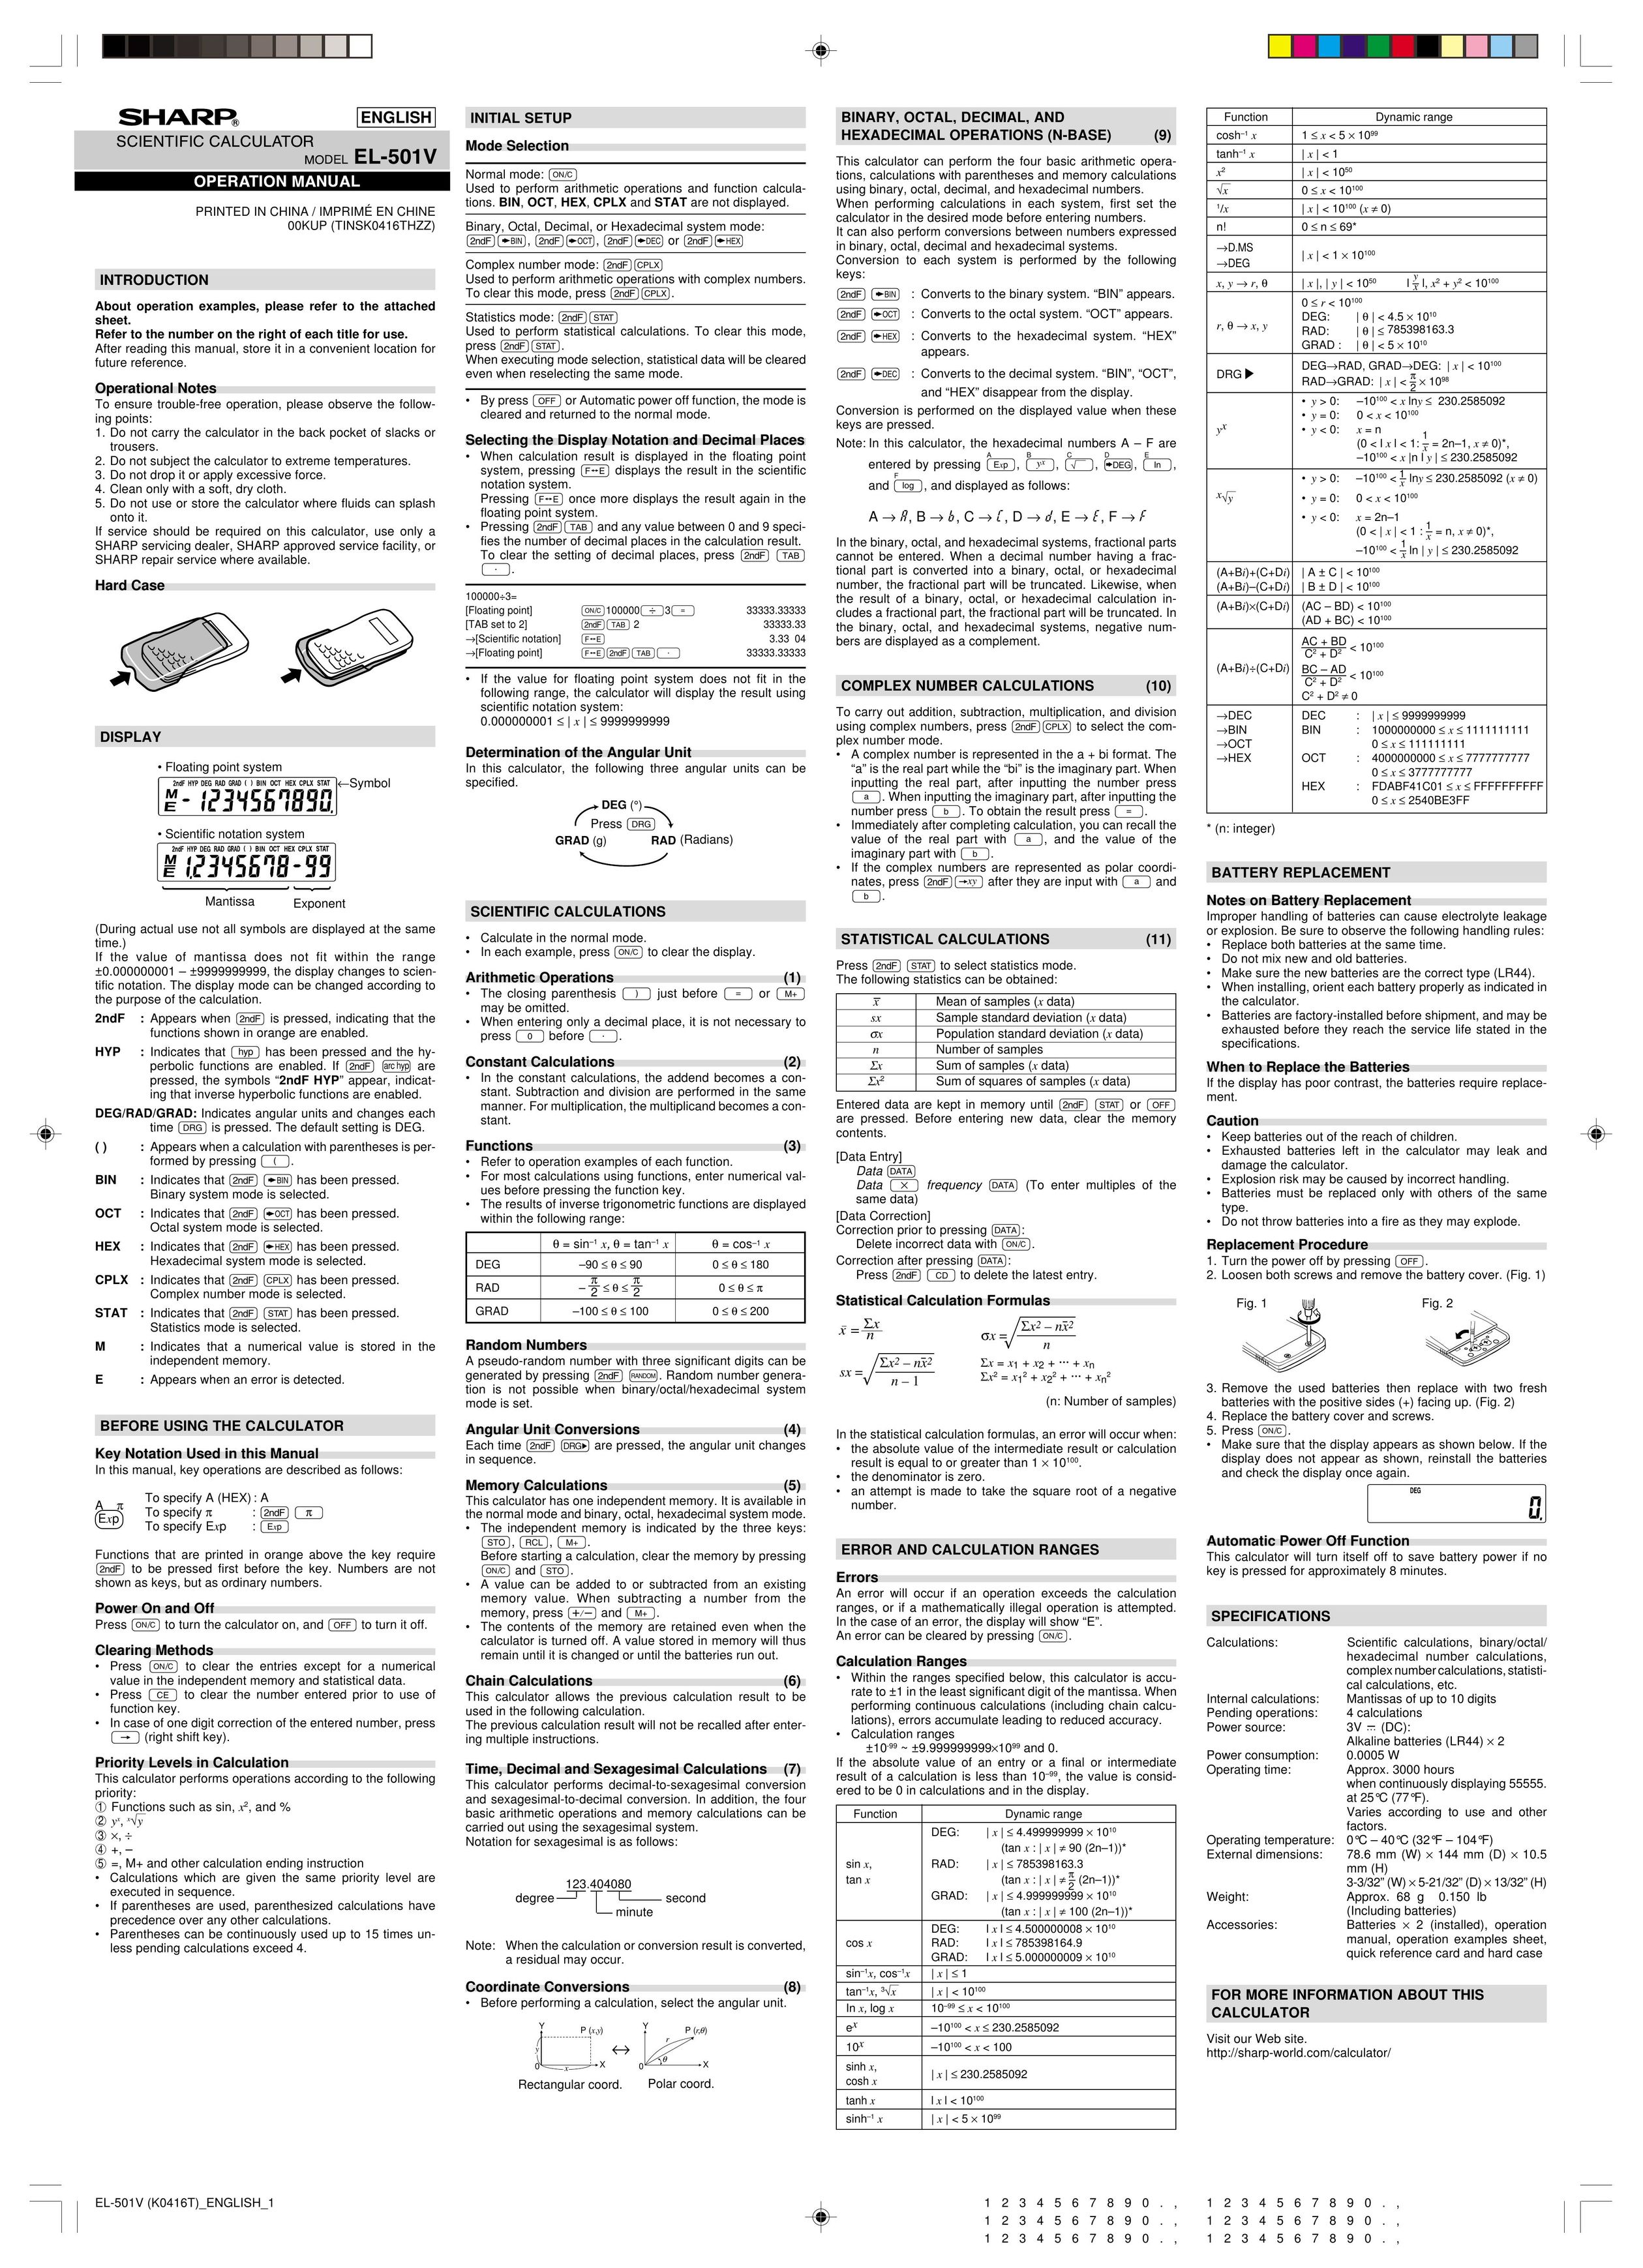 Sharp EL-501V Projector User Manual